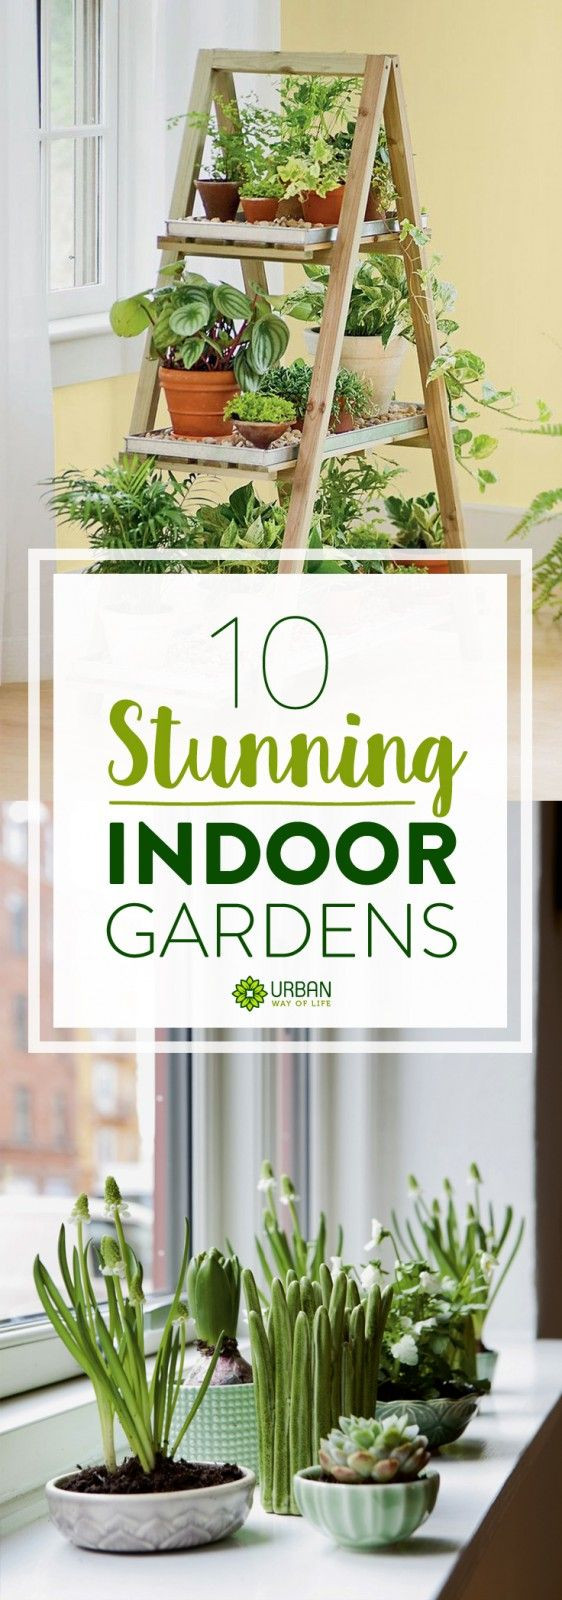 Best ideas about DIY Indoor Gardening
. Save or Pin 25 best ideas about Indoor Gardening on Pinterest Now.